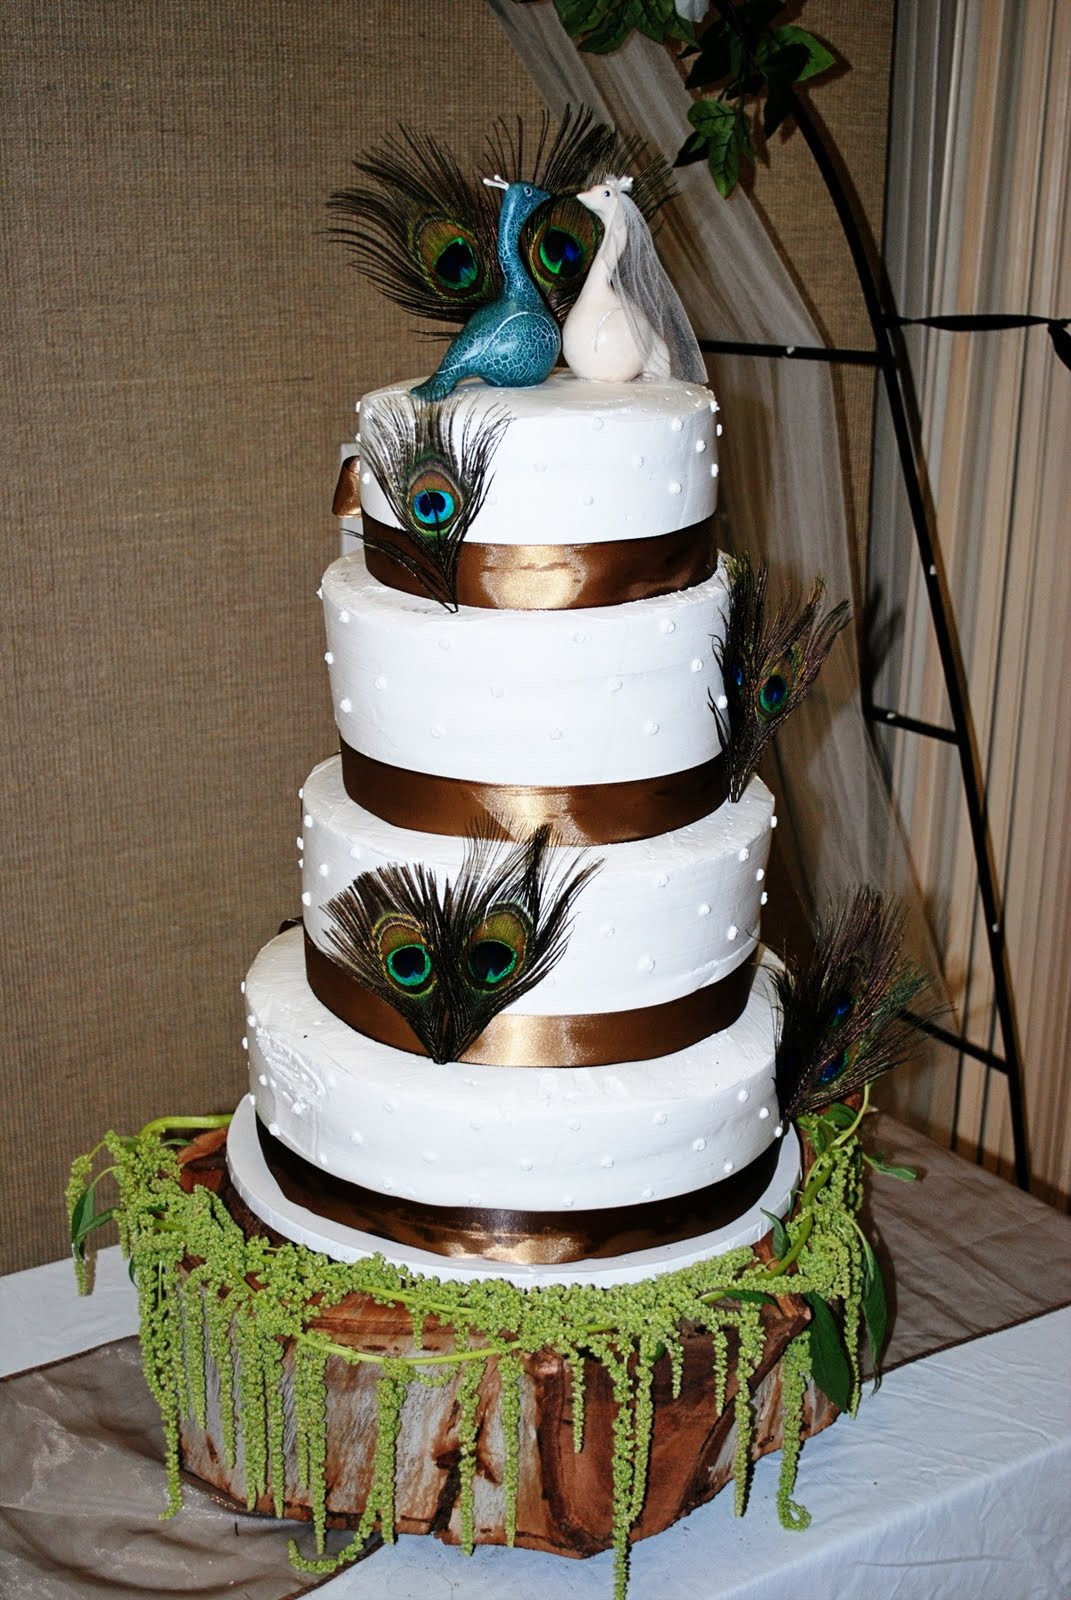 Peacock Wedding Cake
 The Castanons Peacock Wedding Cake